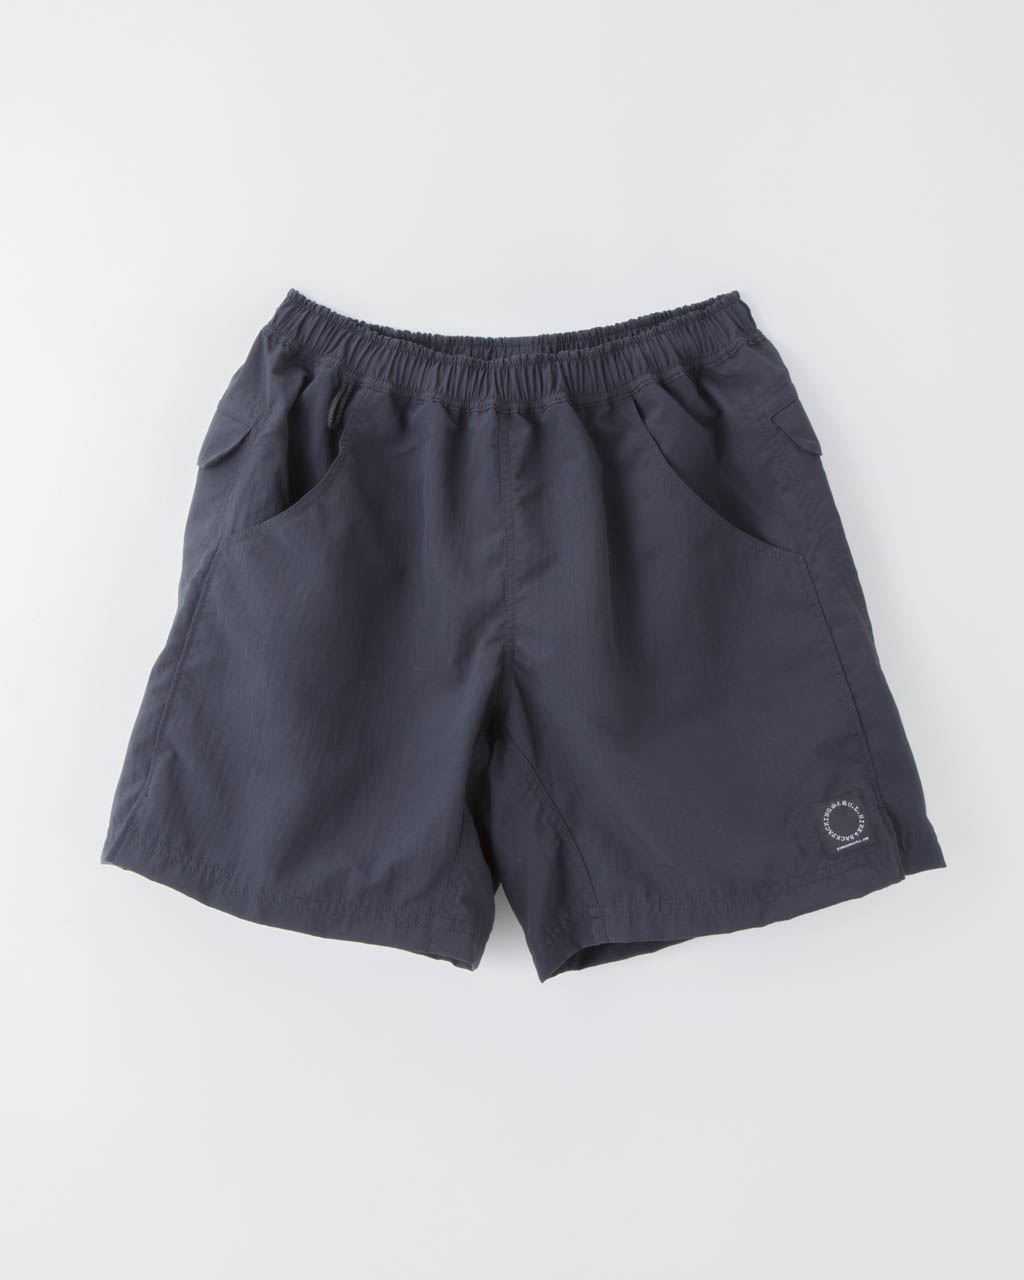 5-Pocket Shorts、5-Pocket Pants追加販売のお知らせ | 山と道 U.L. 